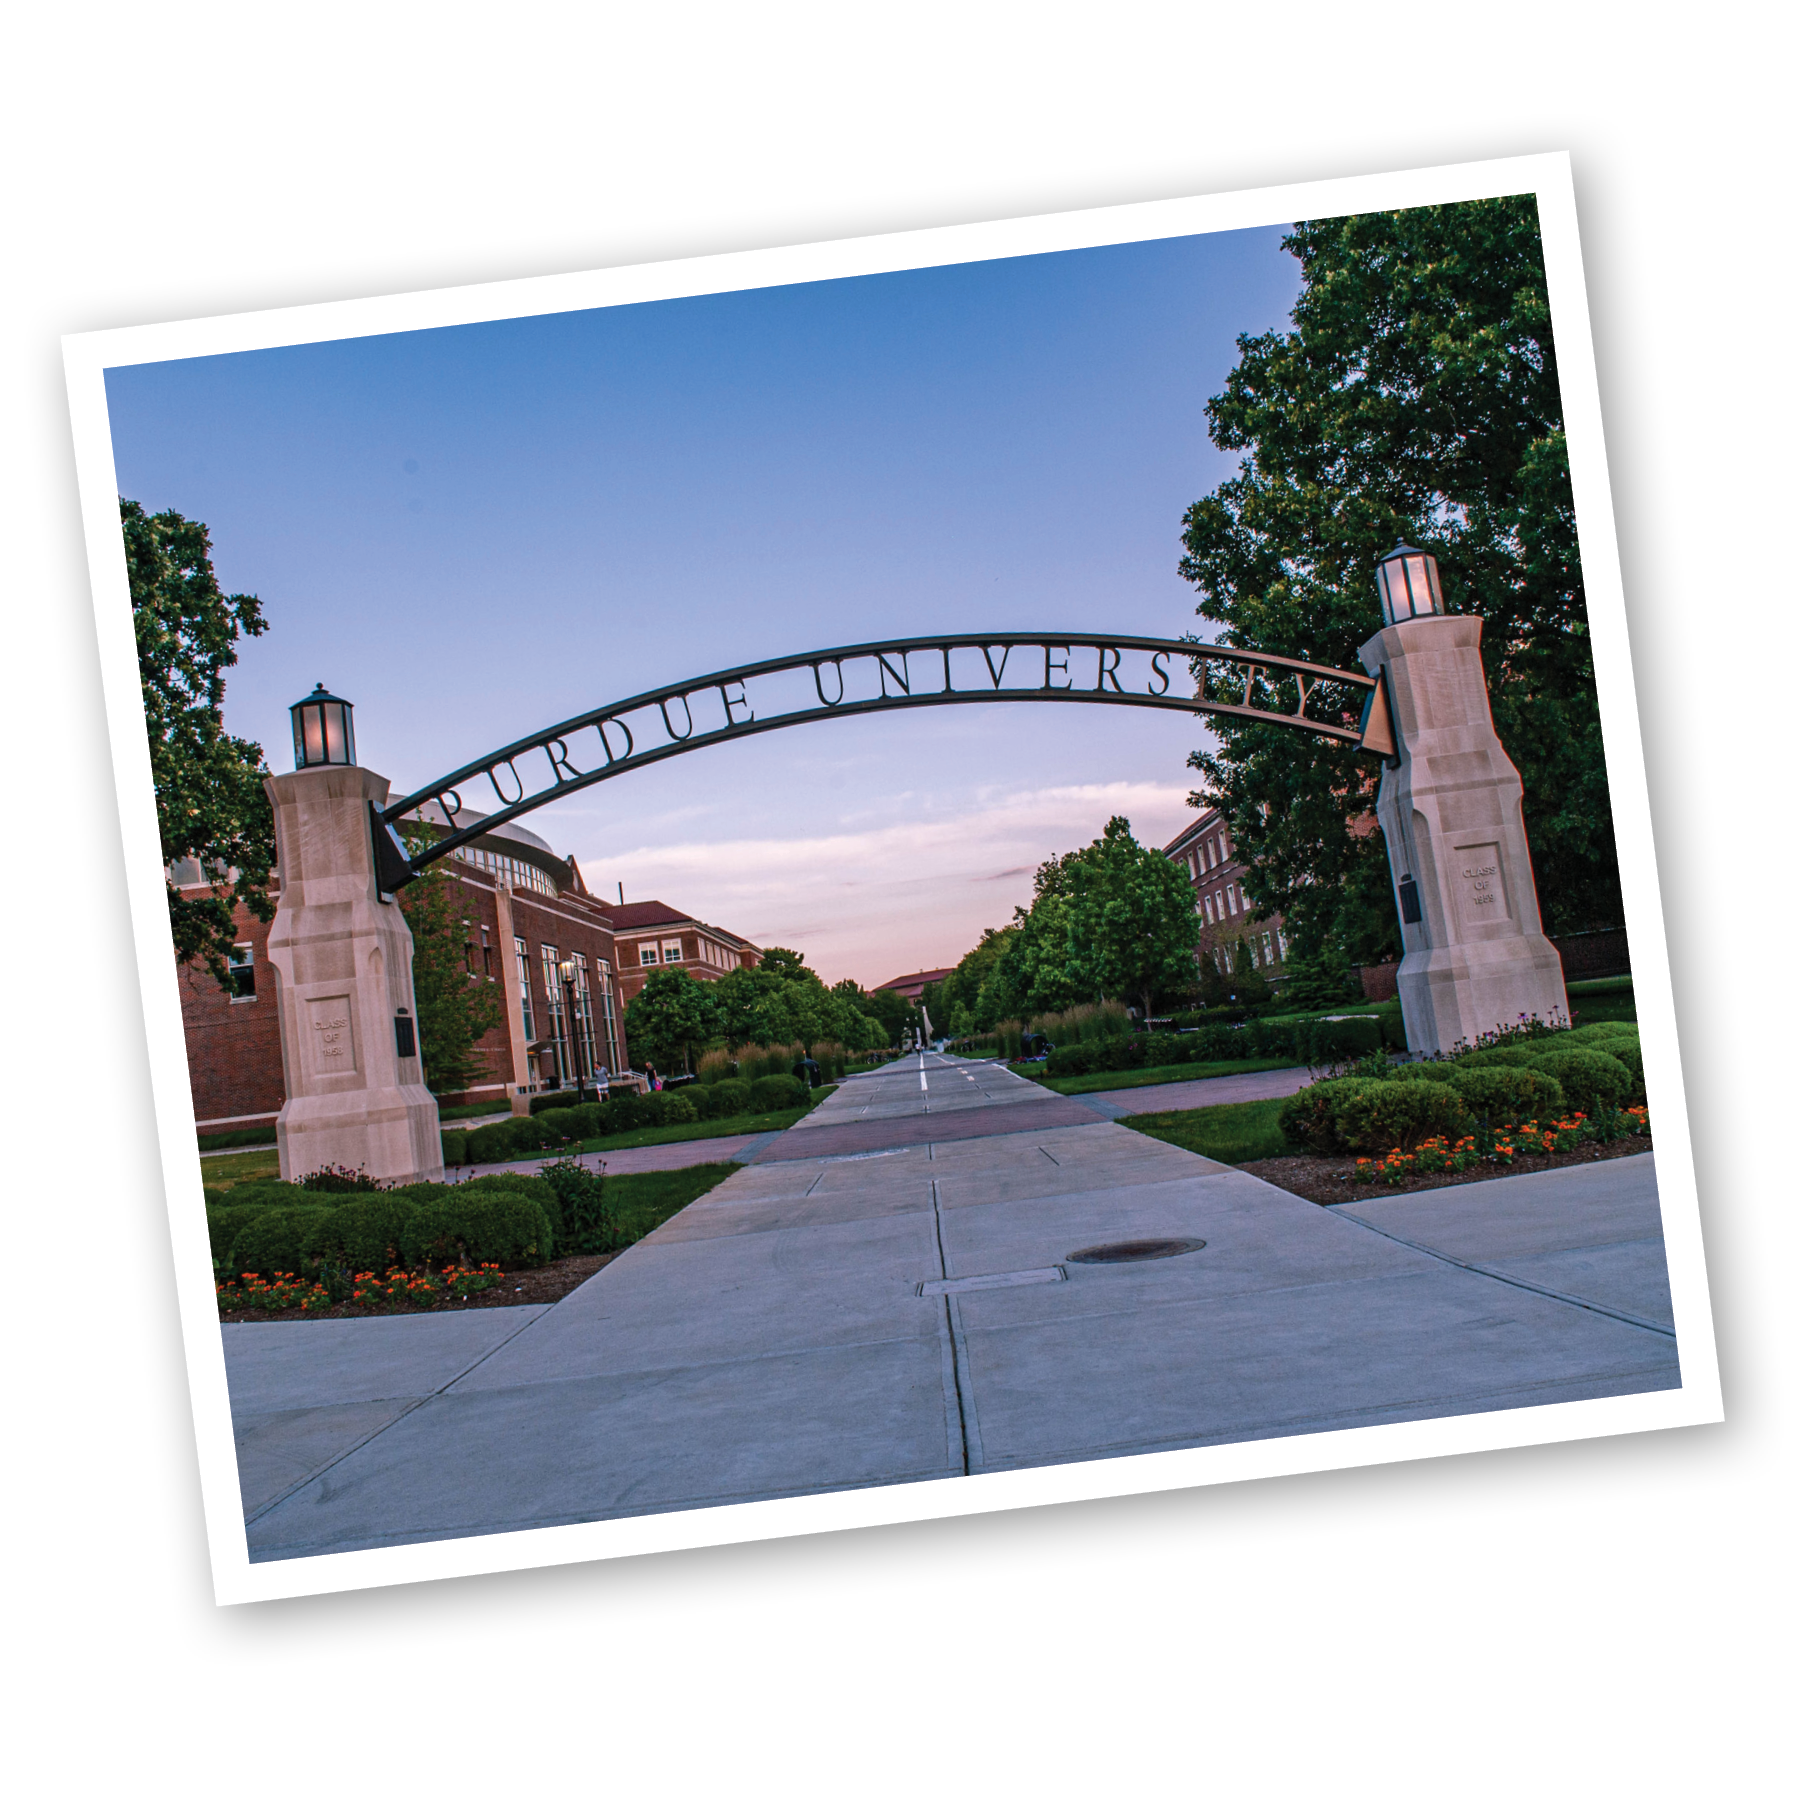 Purdue University gate